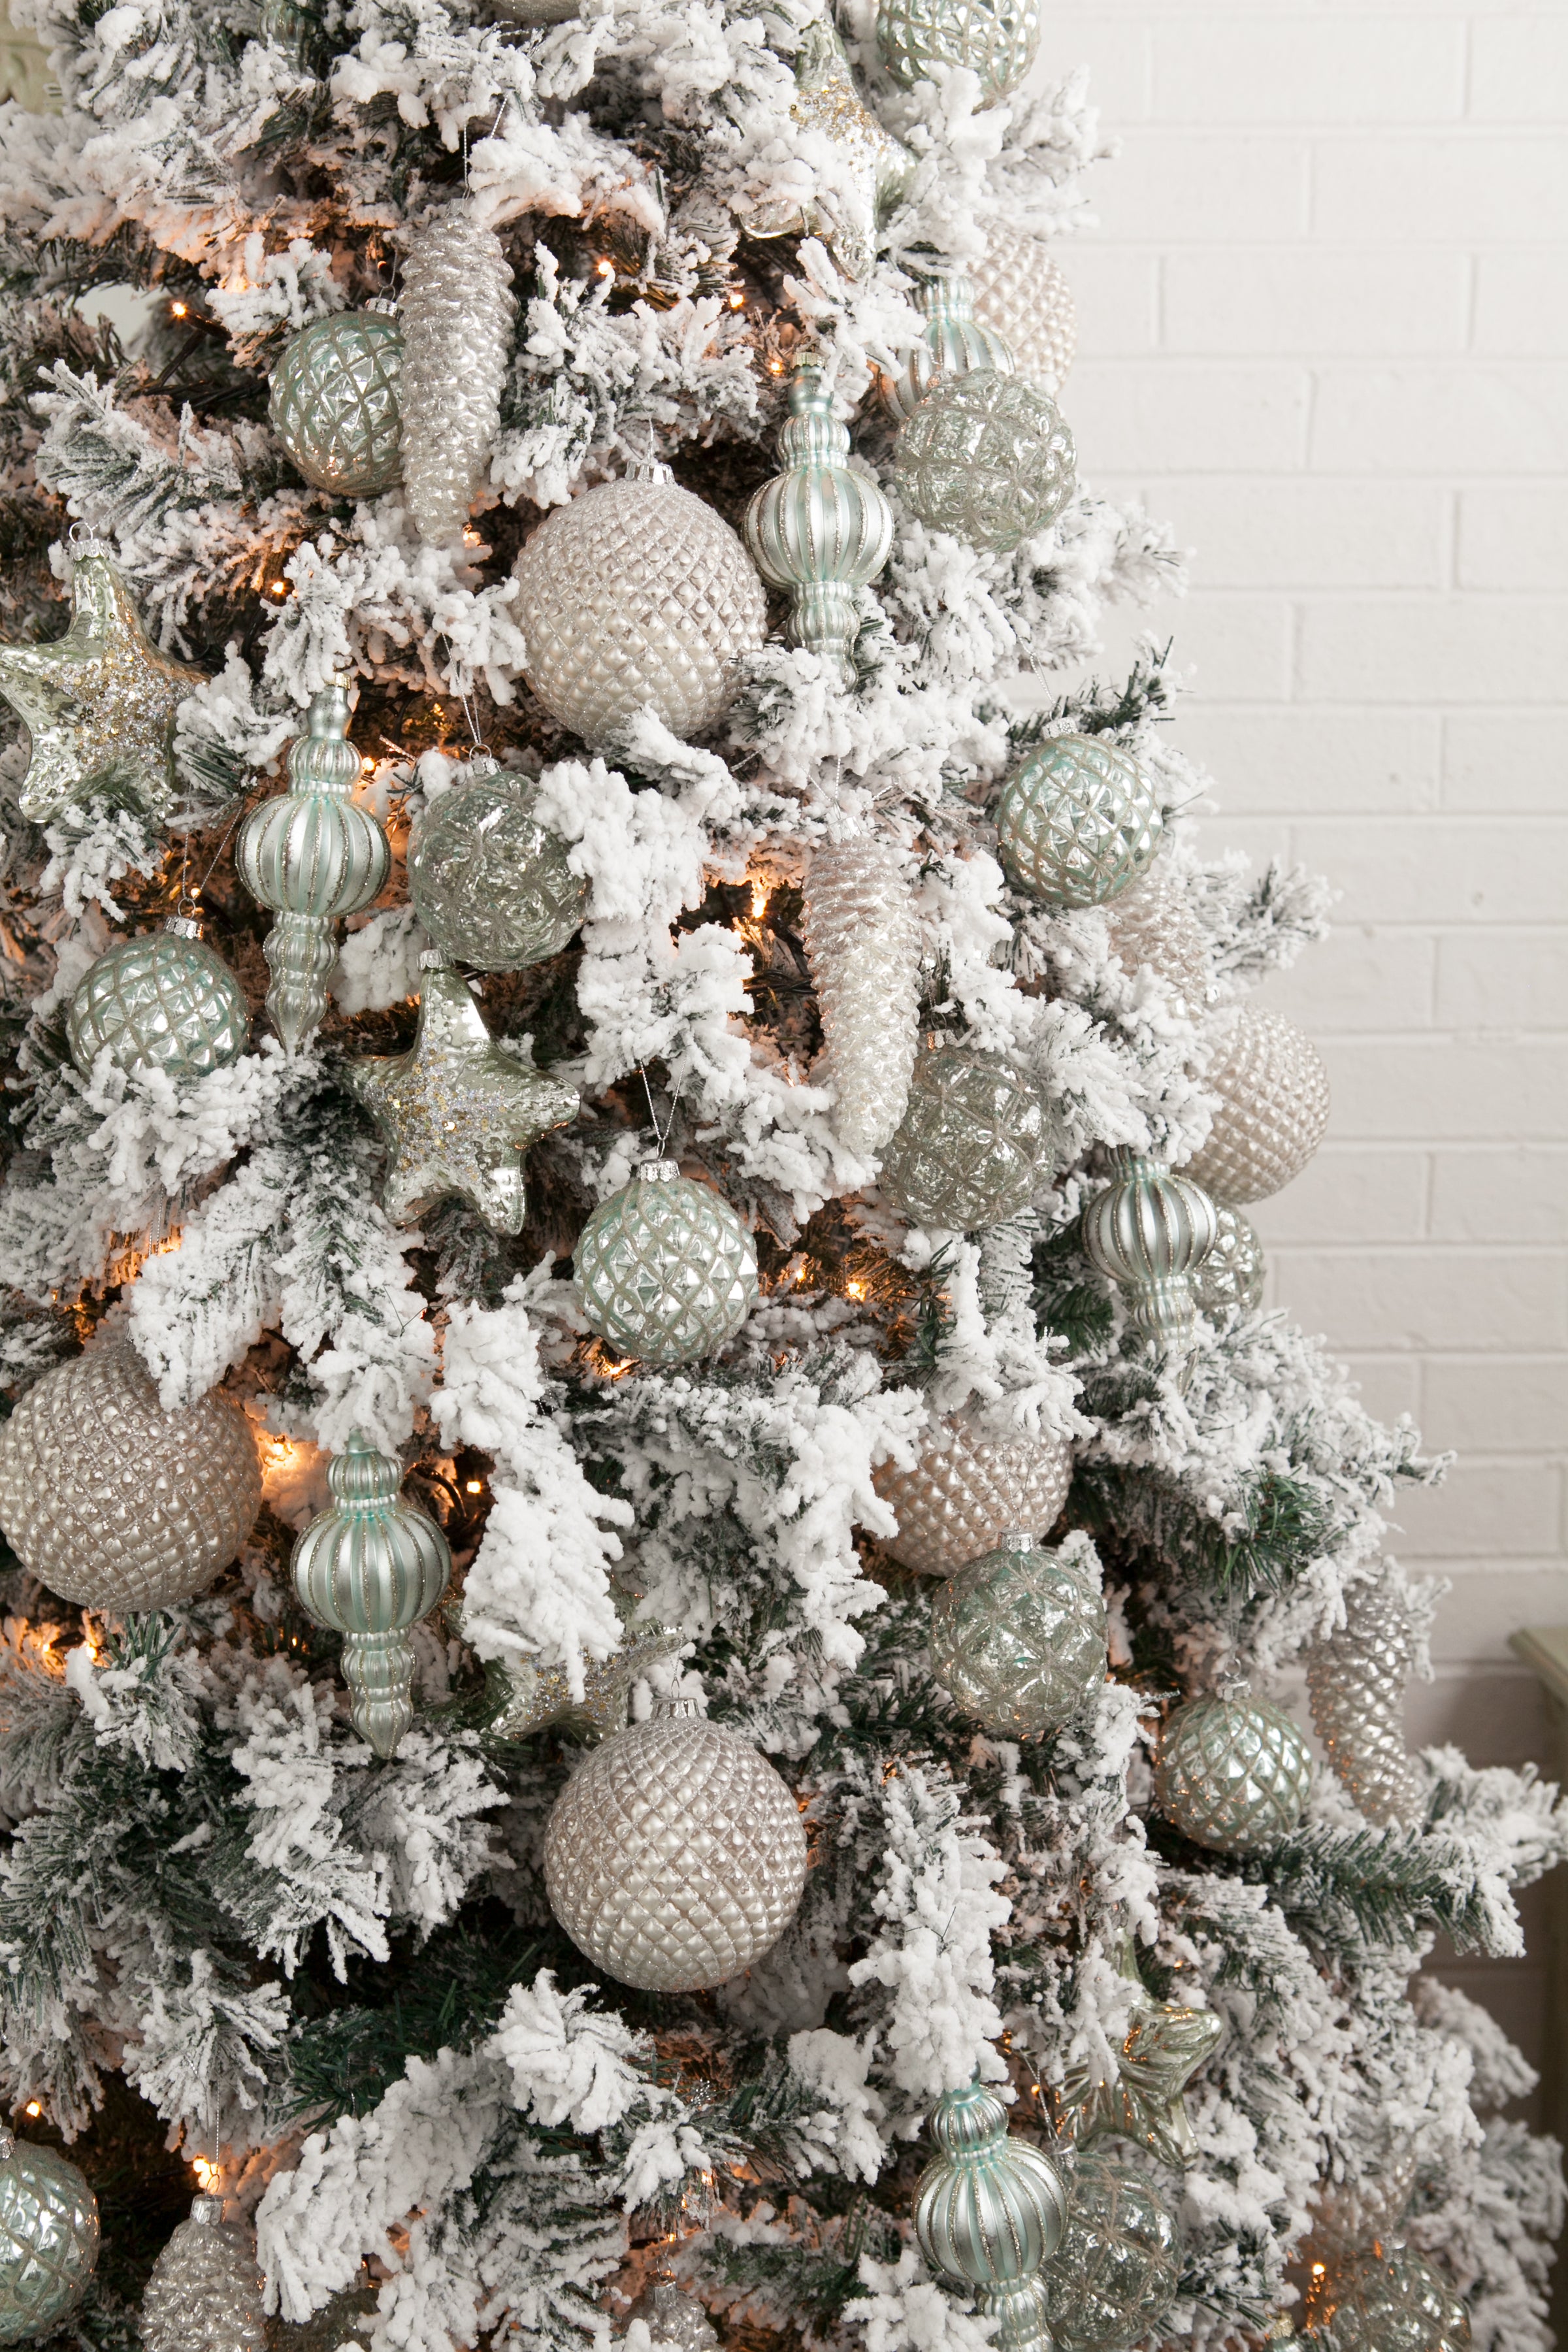 Choosing Your Christmas Tree